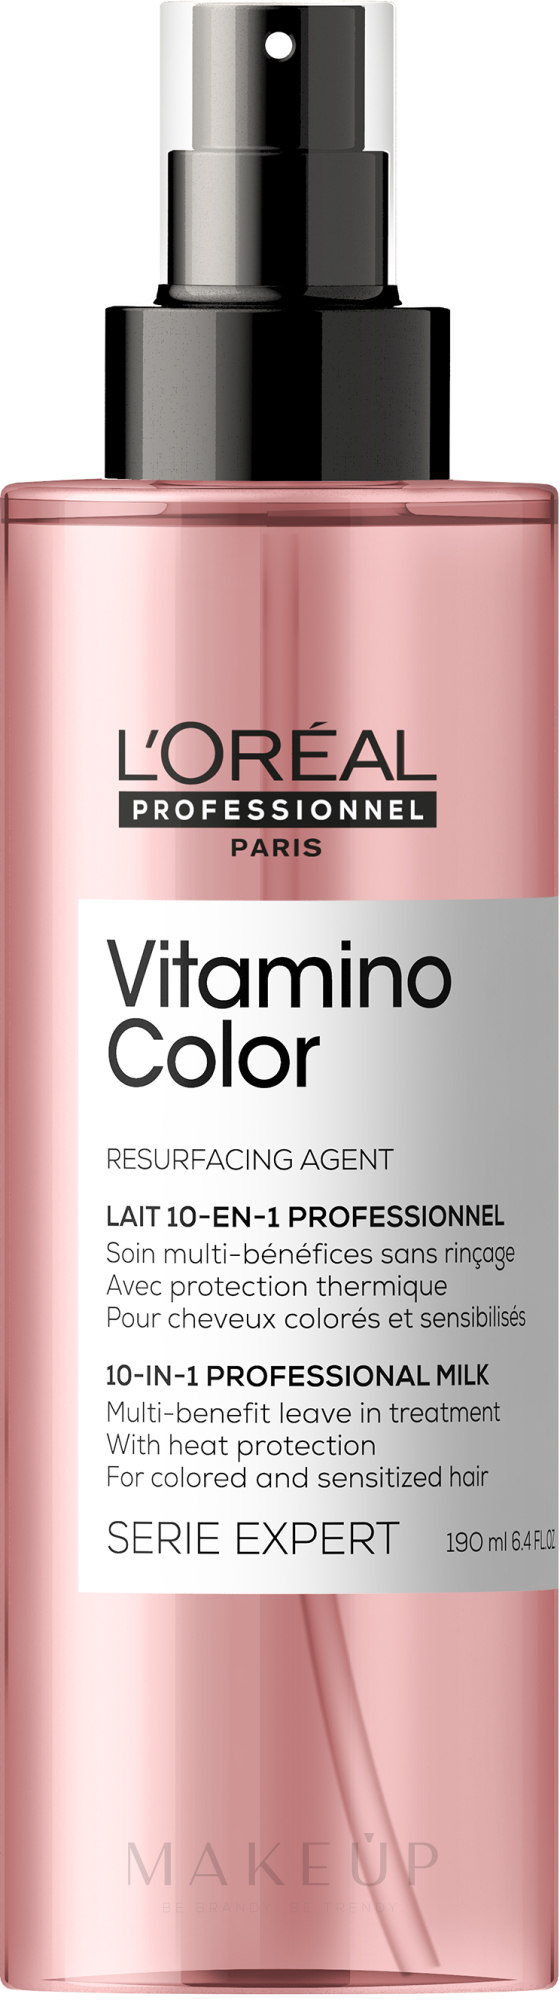 10in1 Mehrzweckspray für coloriertes Haar mit Antioxidantien - L'Oreal Professionnel Vitamino Color A-OX 10 in 1 — Foto 190 ml NEW